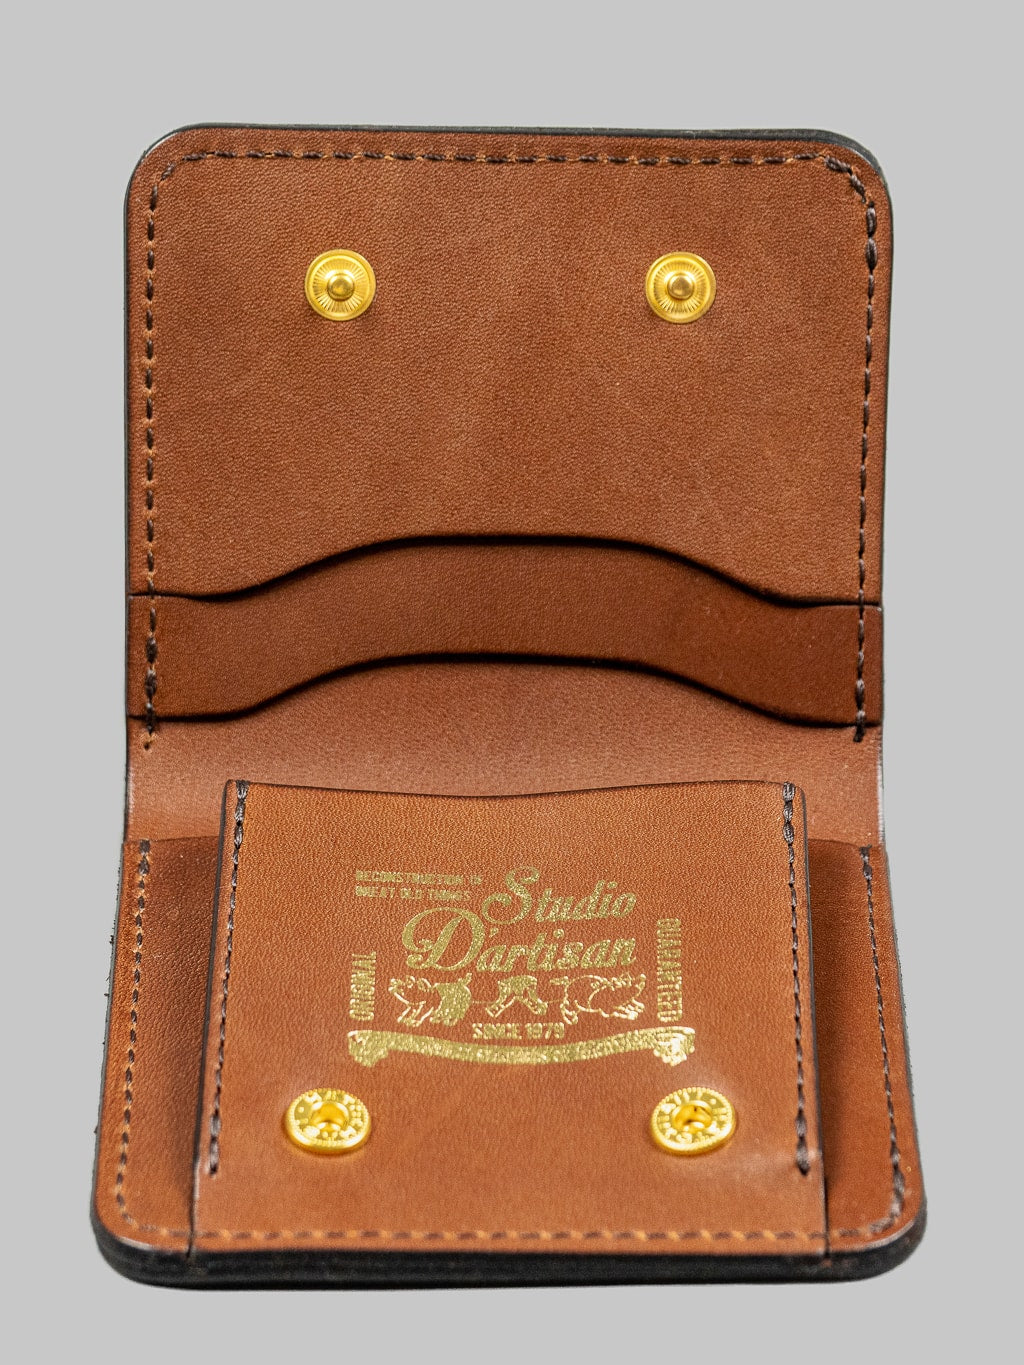 Studio Dartisan brown leather mini wallet made in japan